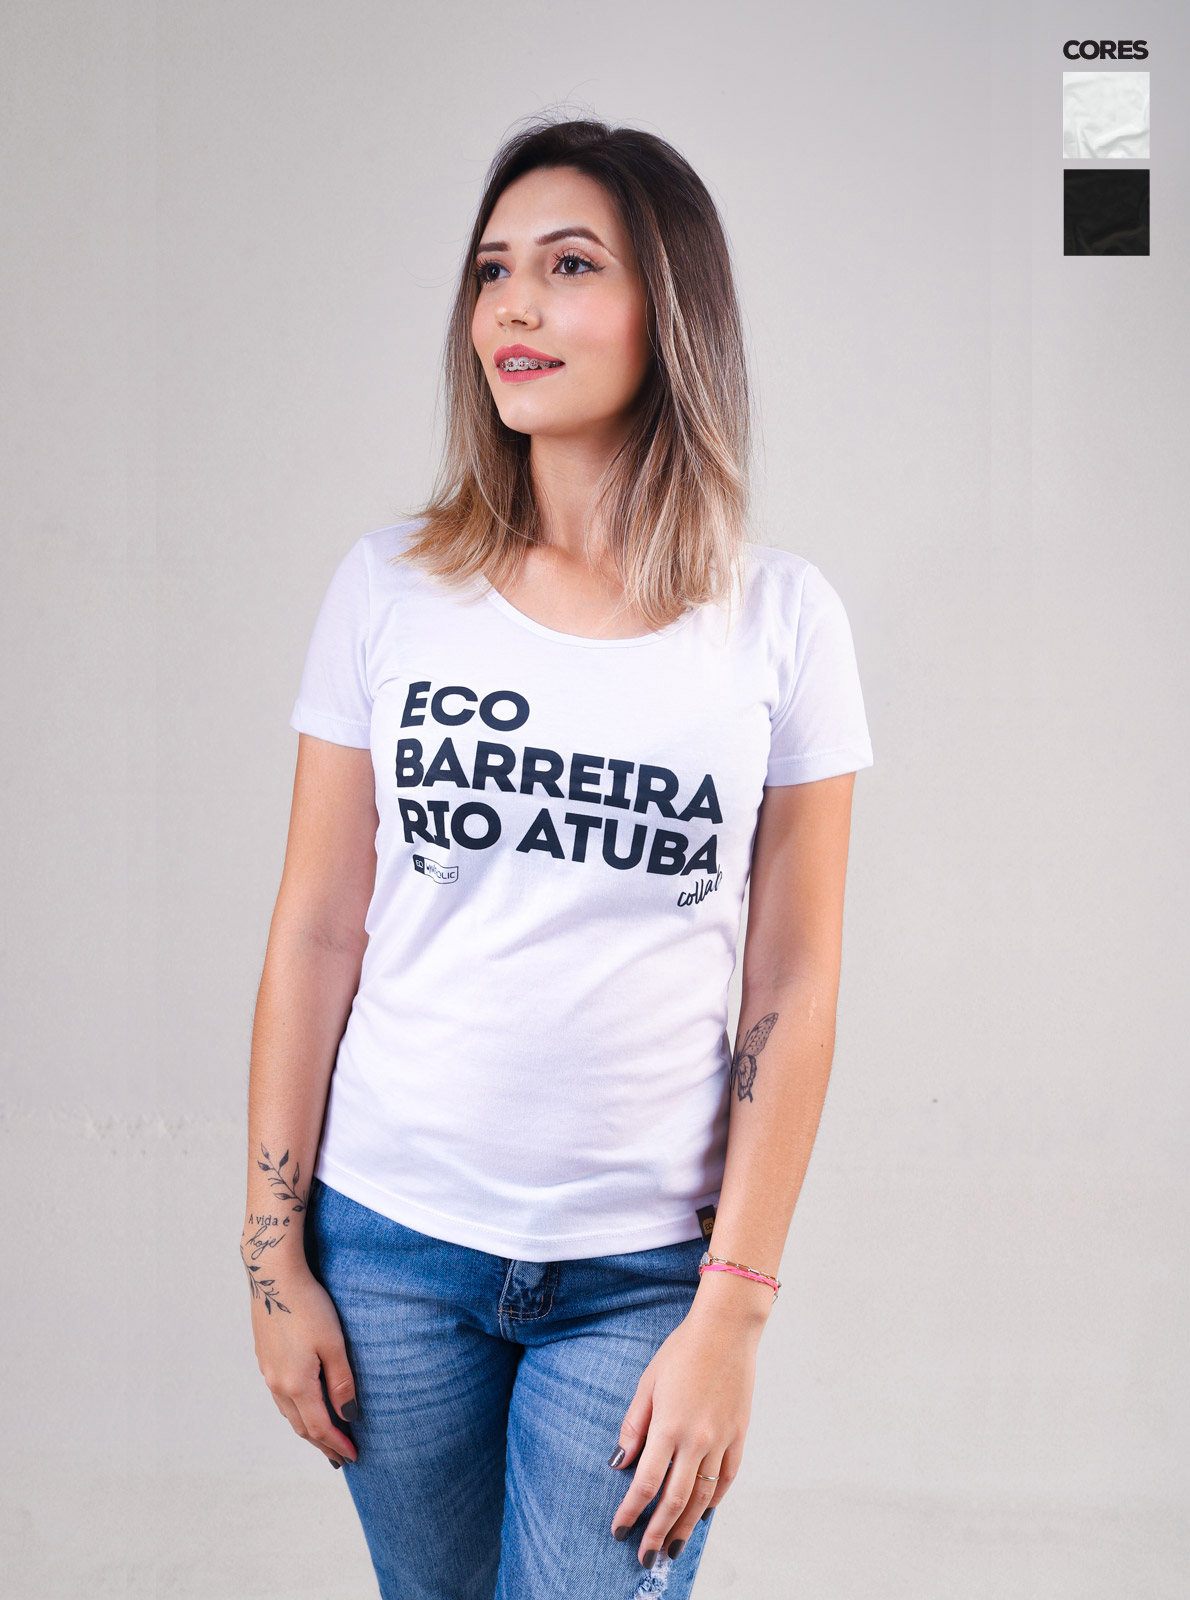 Blusa com frase collab projeto Eco Barreira Rio Atuba preta ou branca